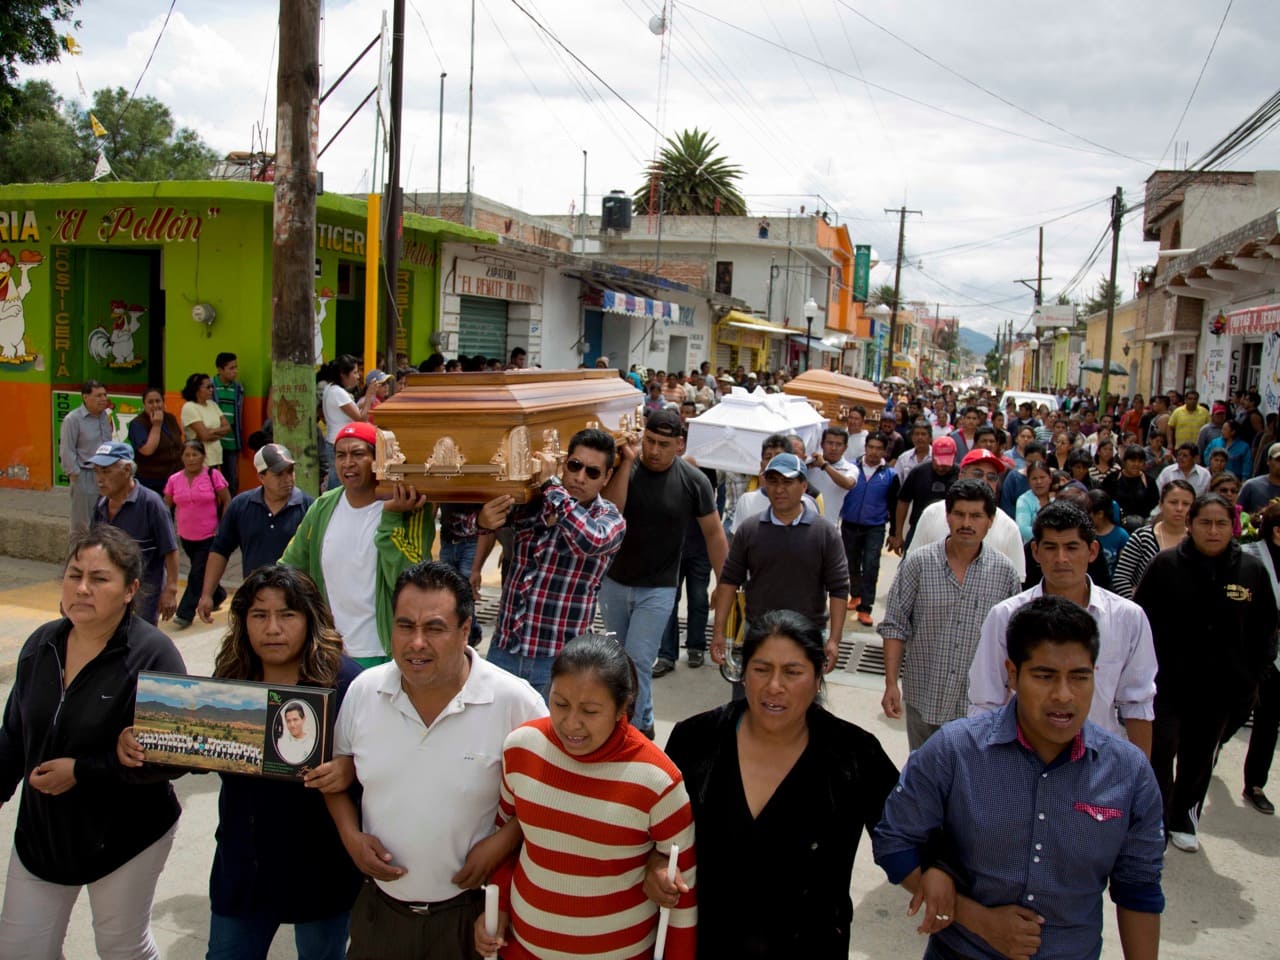 Procession in Nochixtlan Oaxaca, 20 June 2016; 6 people were killed in disturbances in this city, AP Photo/Eduardo Verdugo